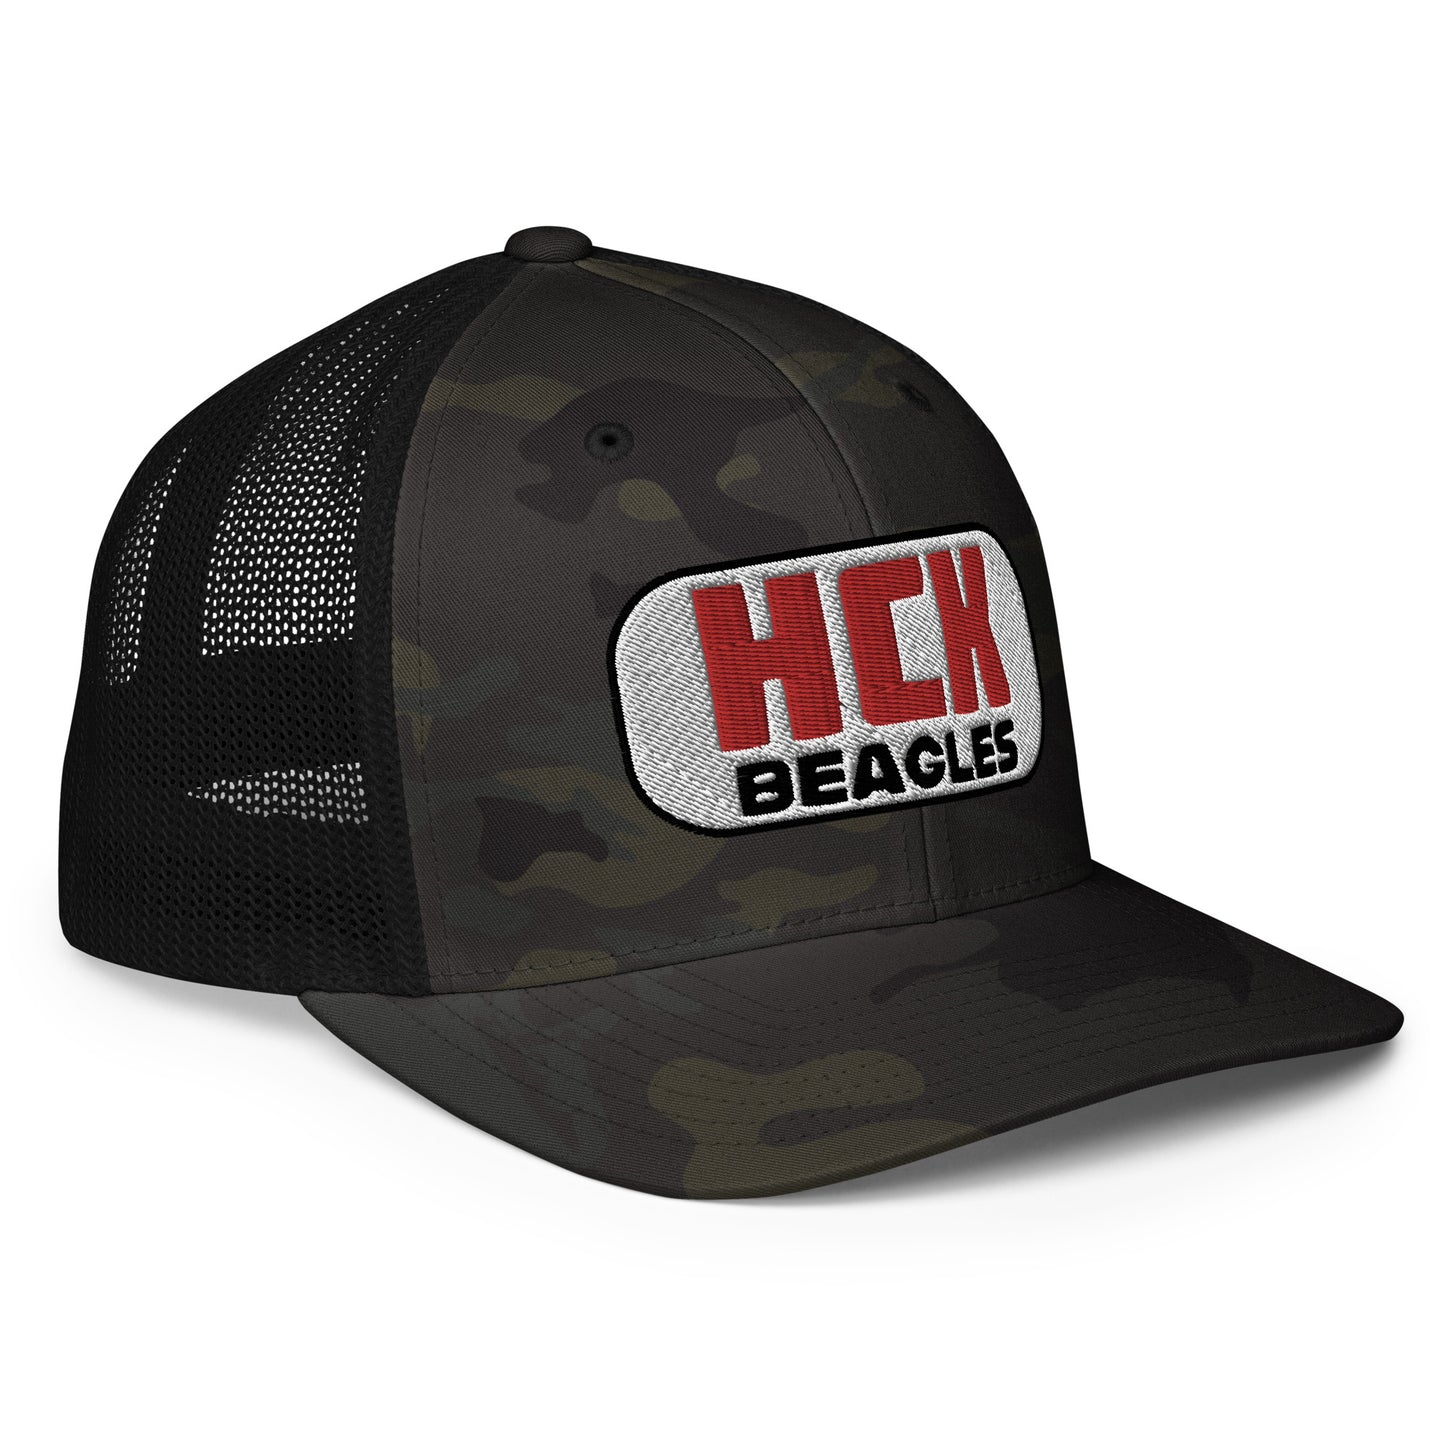 HCK Beagles FlexFit Hat